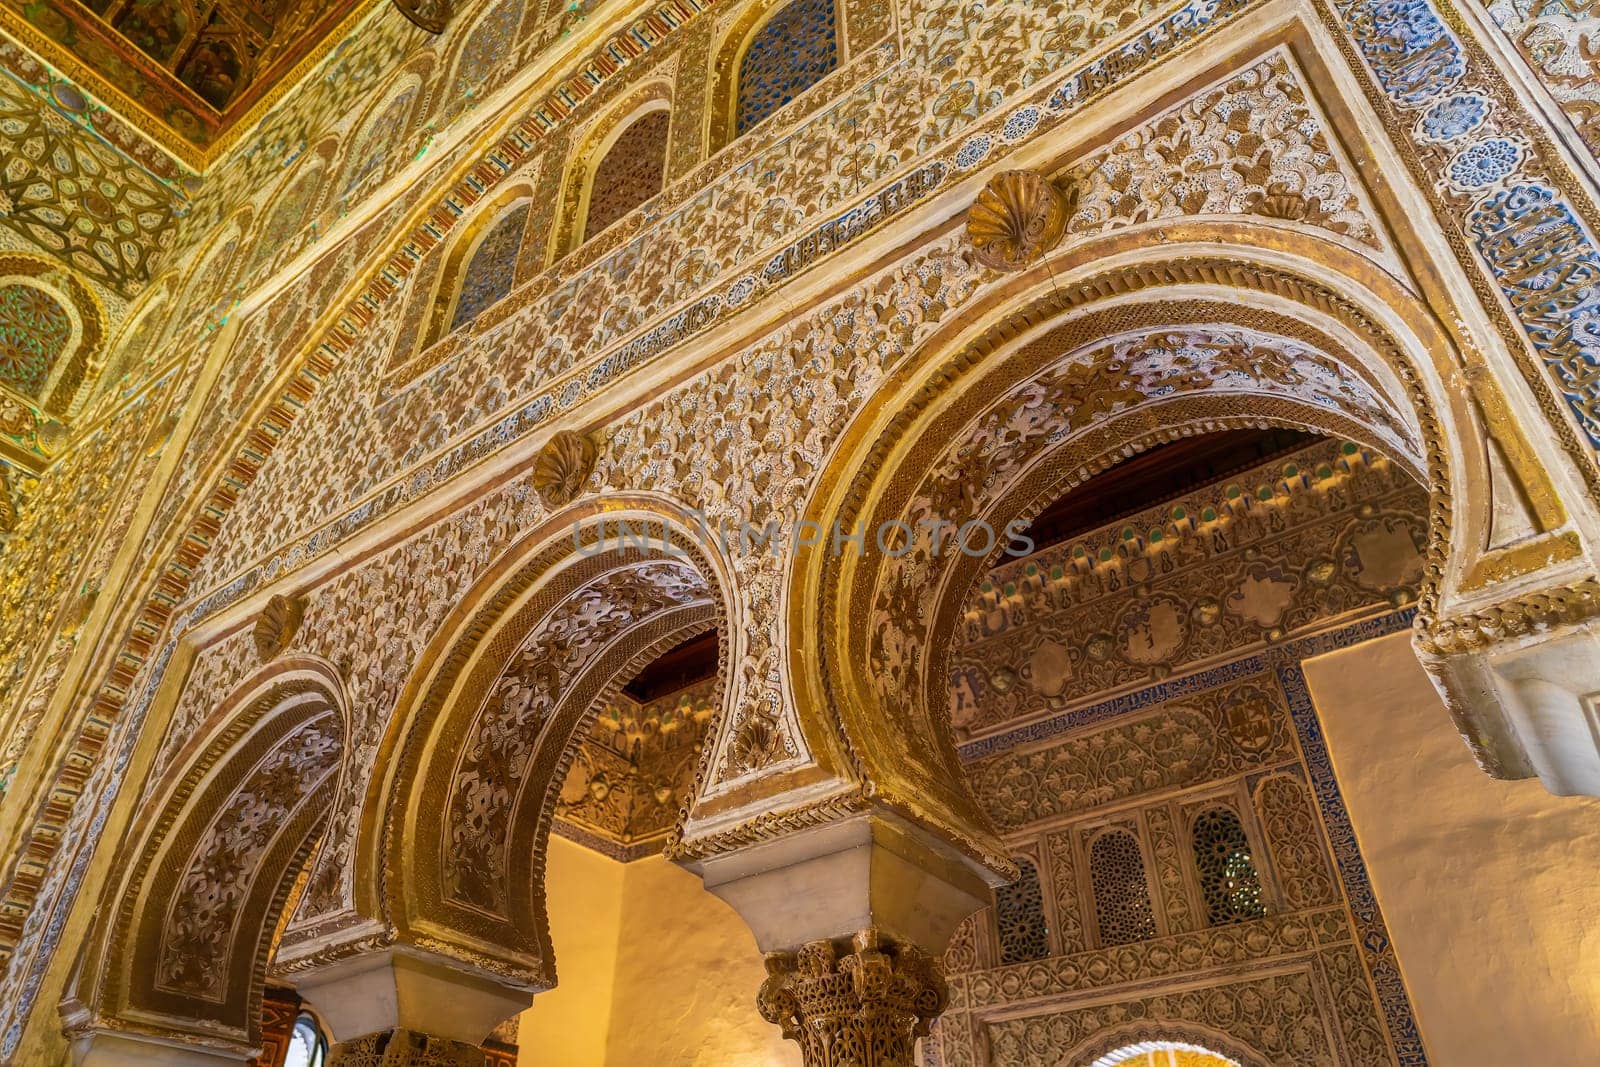 Interior details of Real Alcazar de Sevilla in Spain